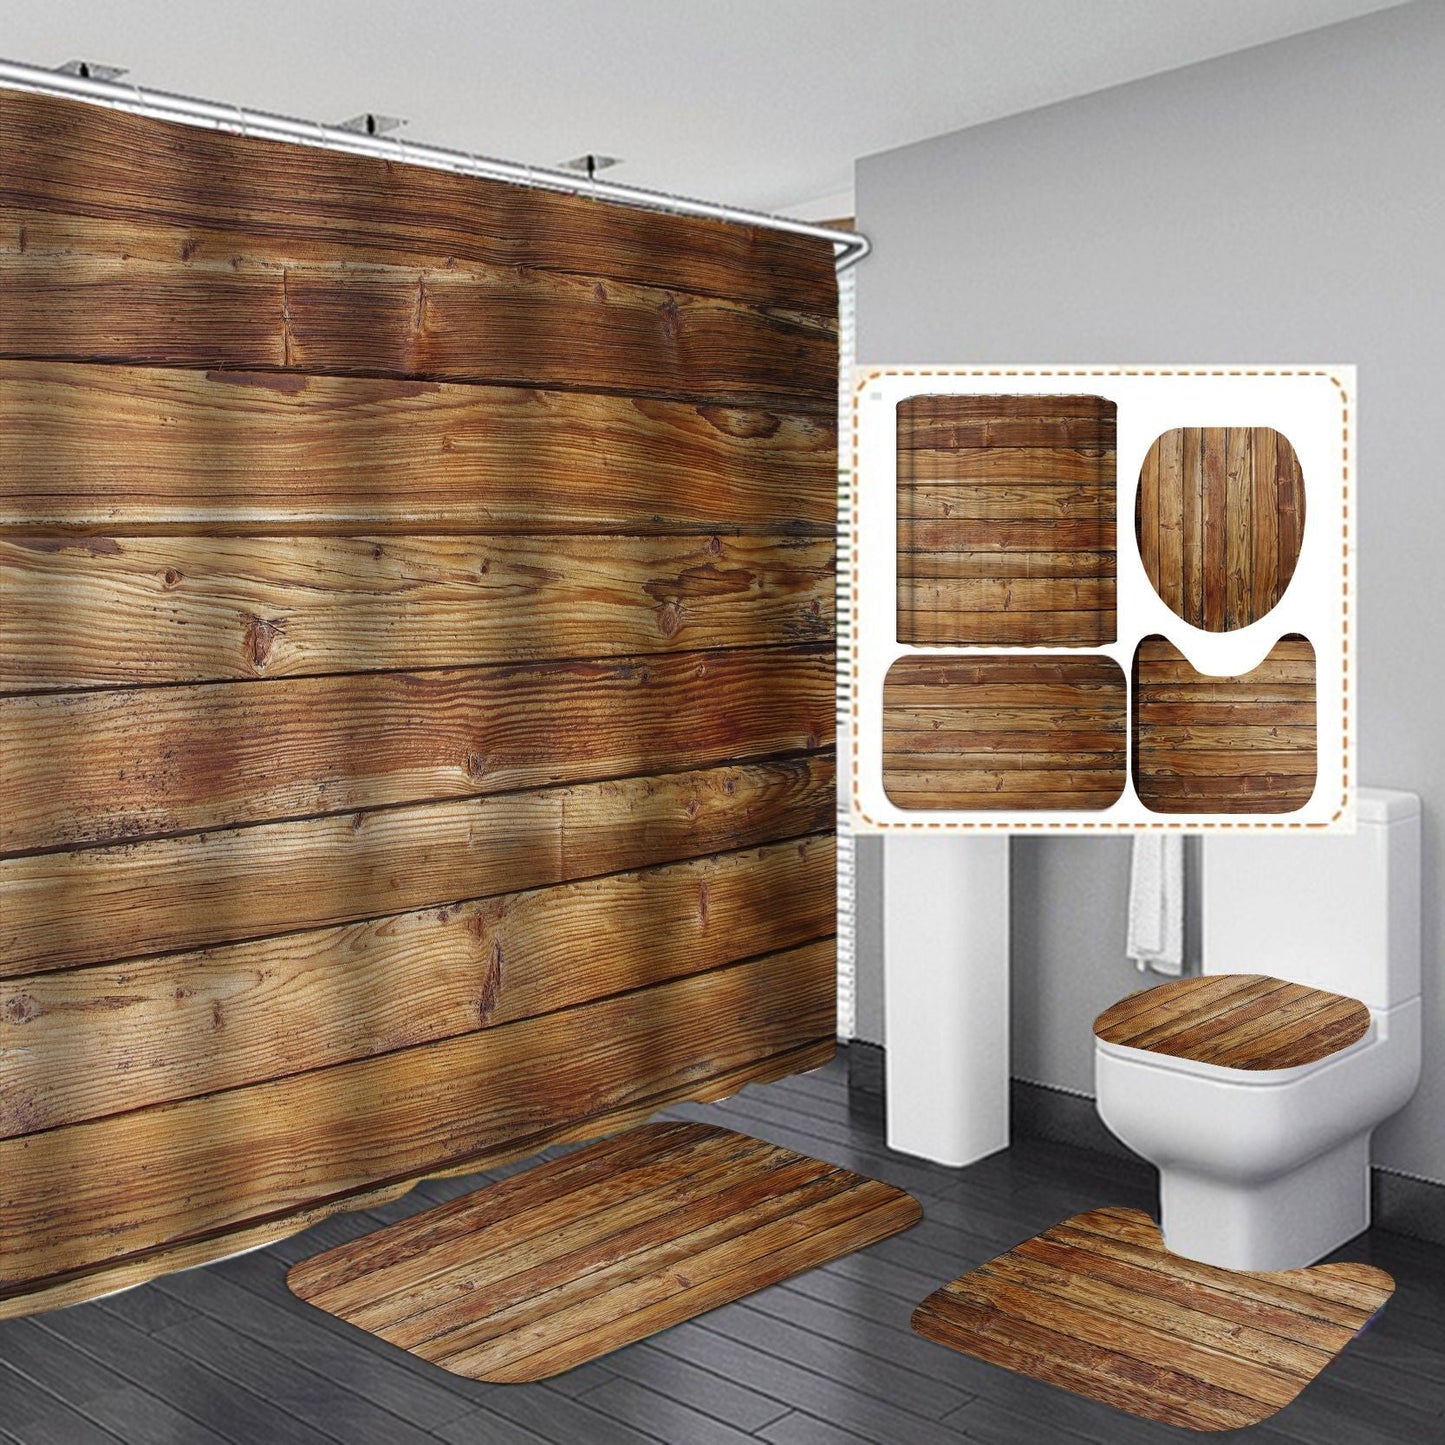 Vintage Wooden Door Design Shower Curtain Bathroom SetsNon-Slip Toilet Lid Cover